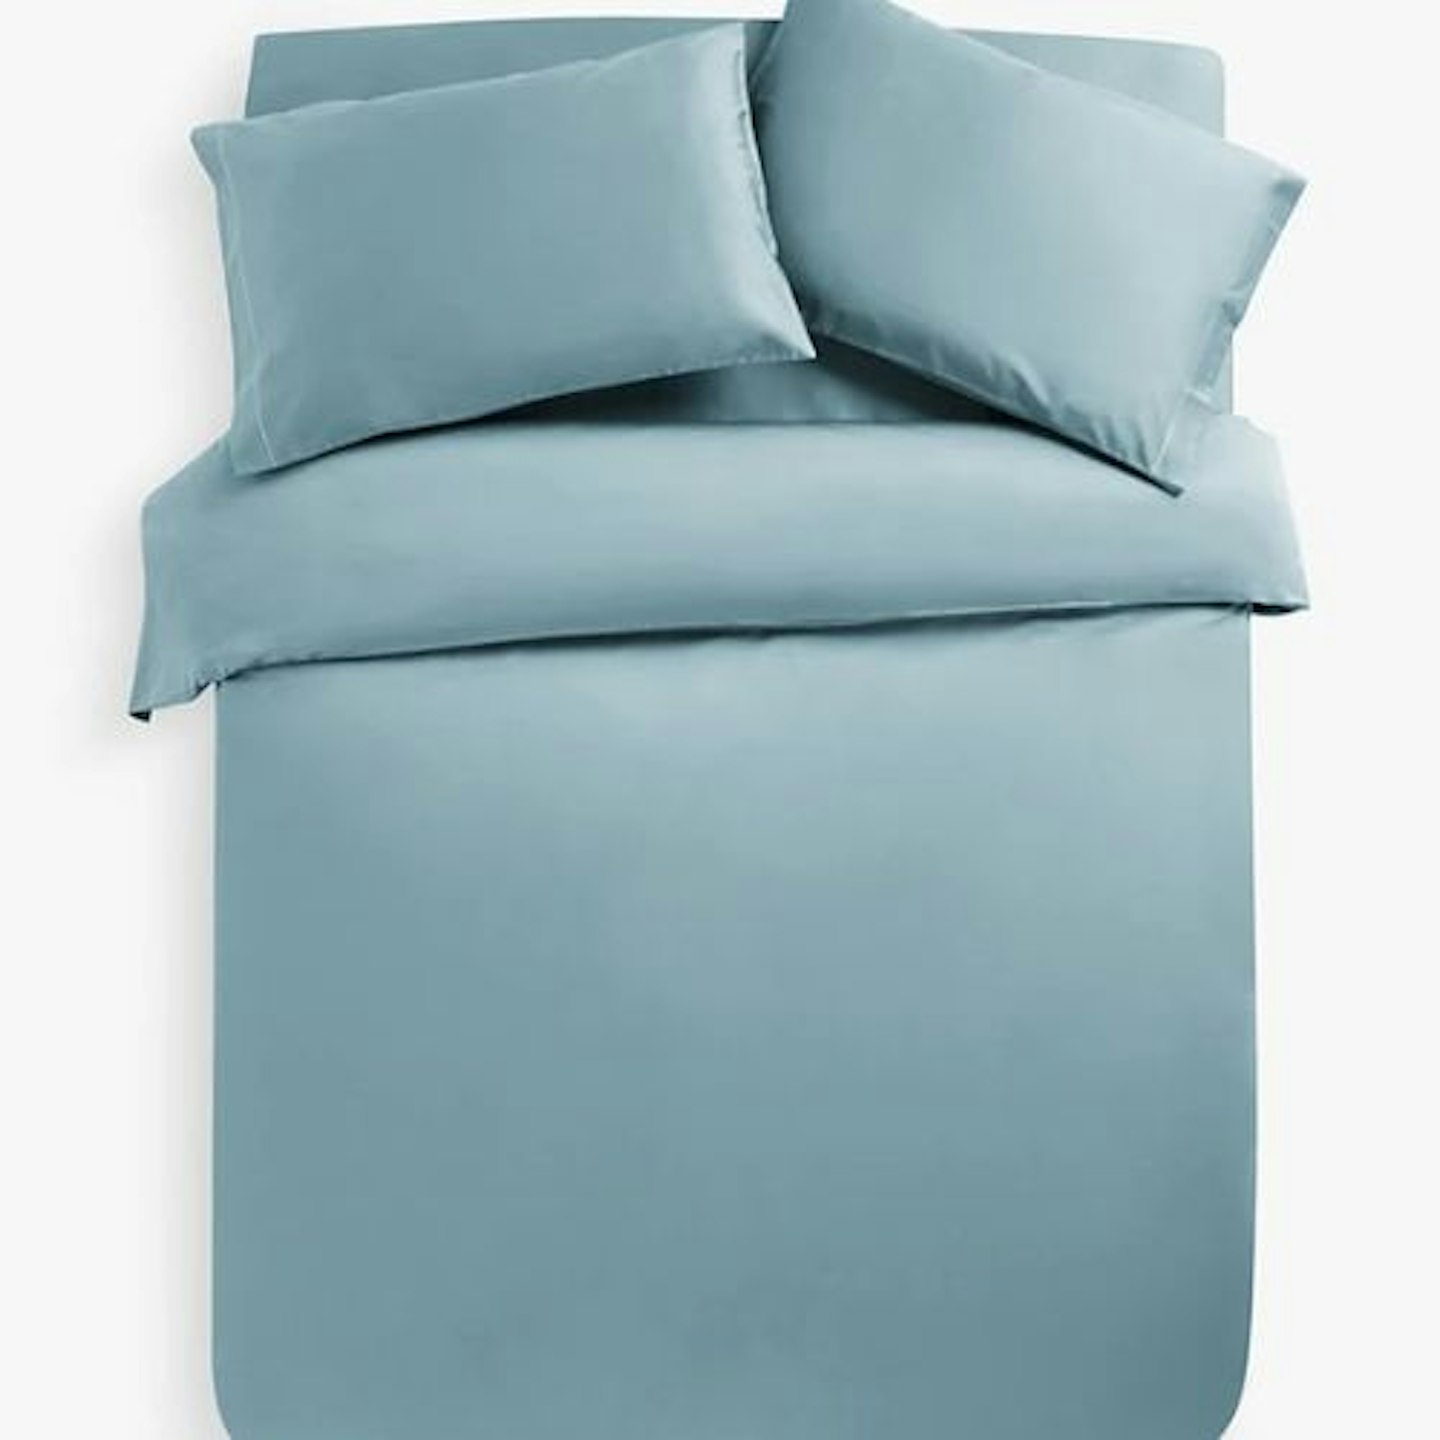 John Lewis Soft & Silky 400 Thread Count Egyptian Cotton Pair Standard Pillowcase, Horizon